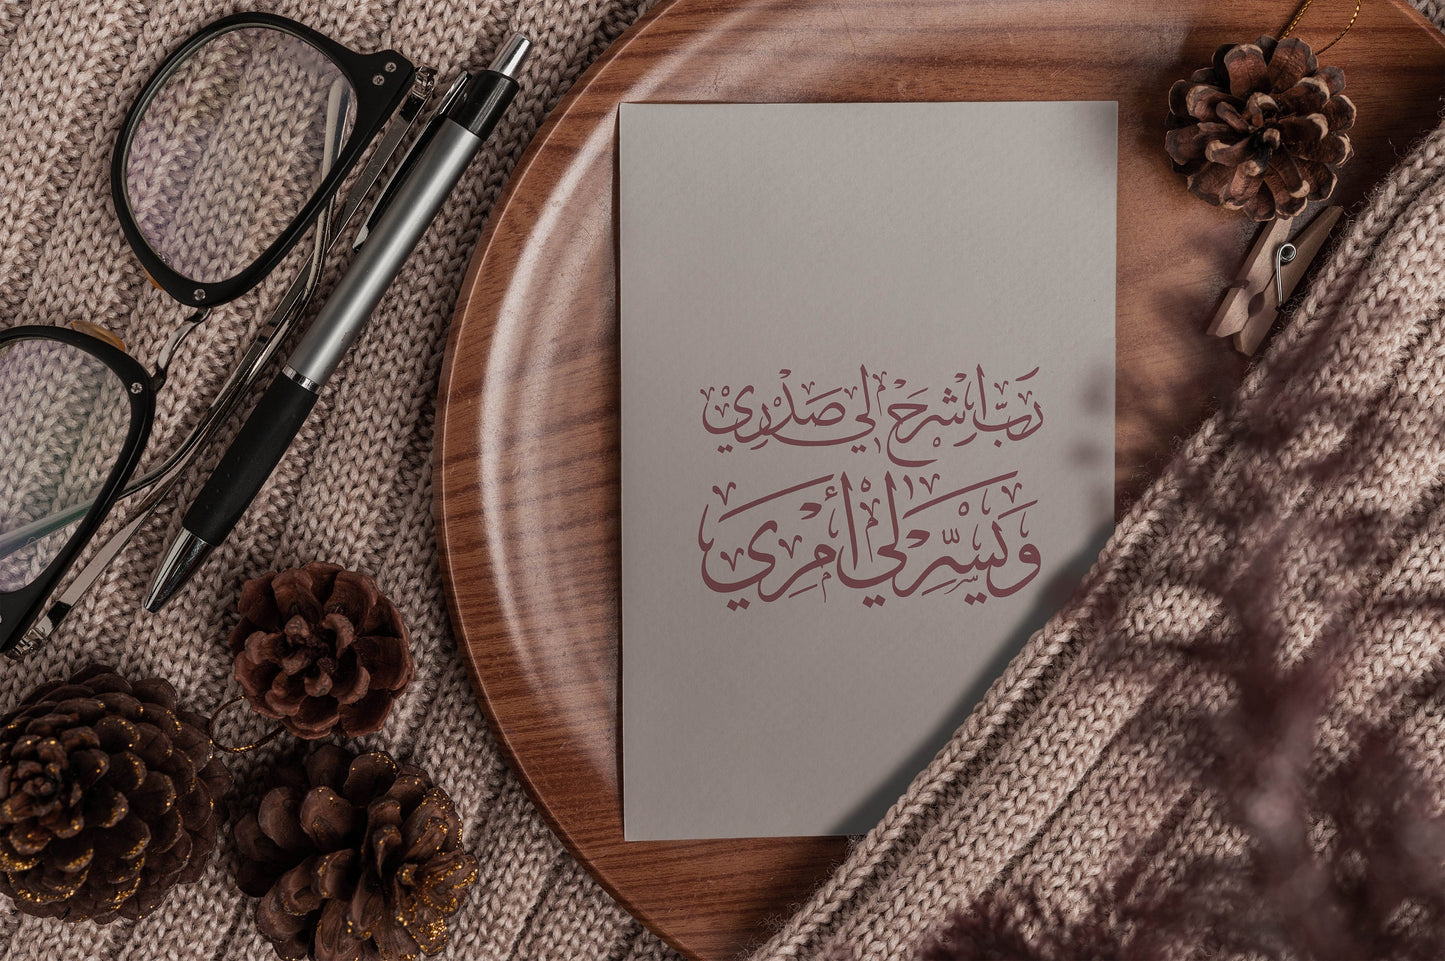 Arabic Calligraphy Dua for Success Rabbish Rahli Printable Art Minimalist For Islamic Decor, Neutral Maroon Wall Art Downloadable Print